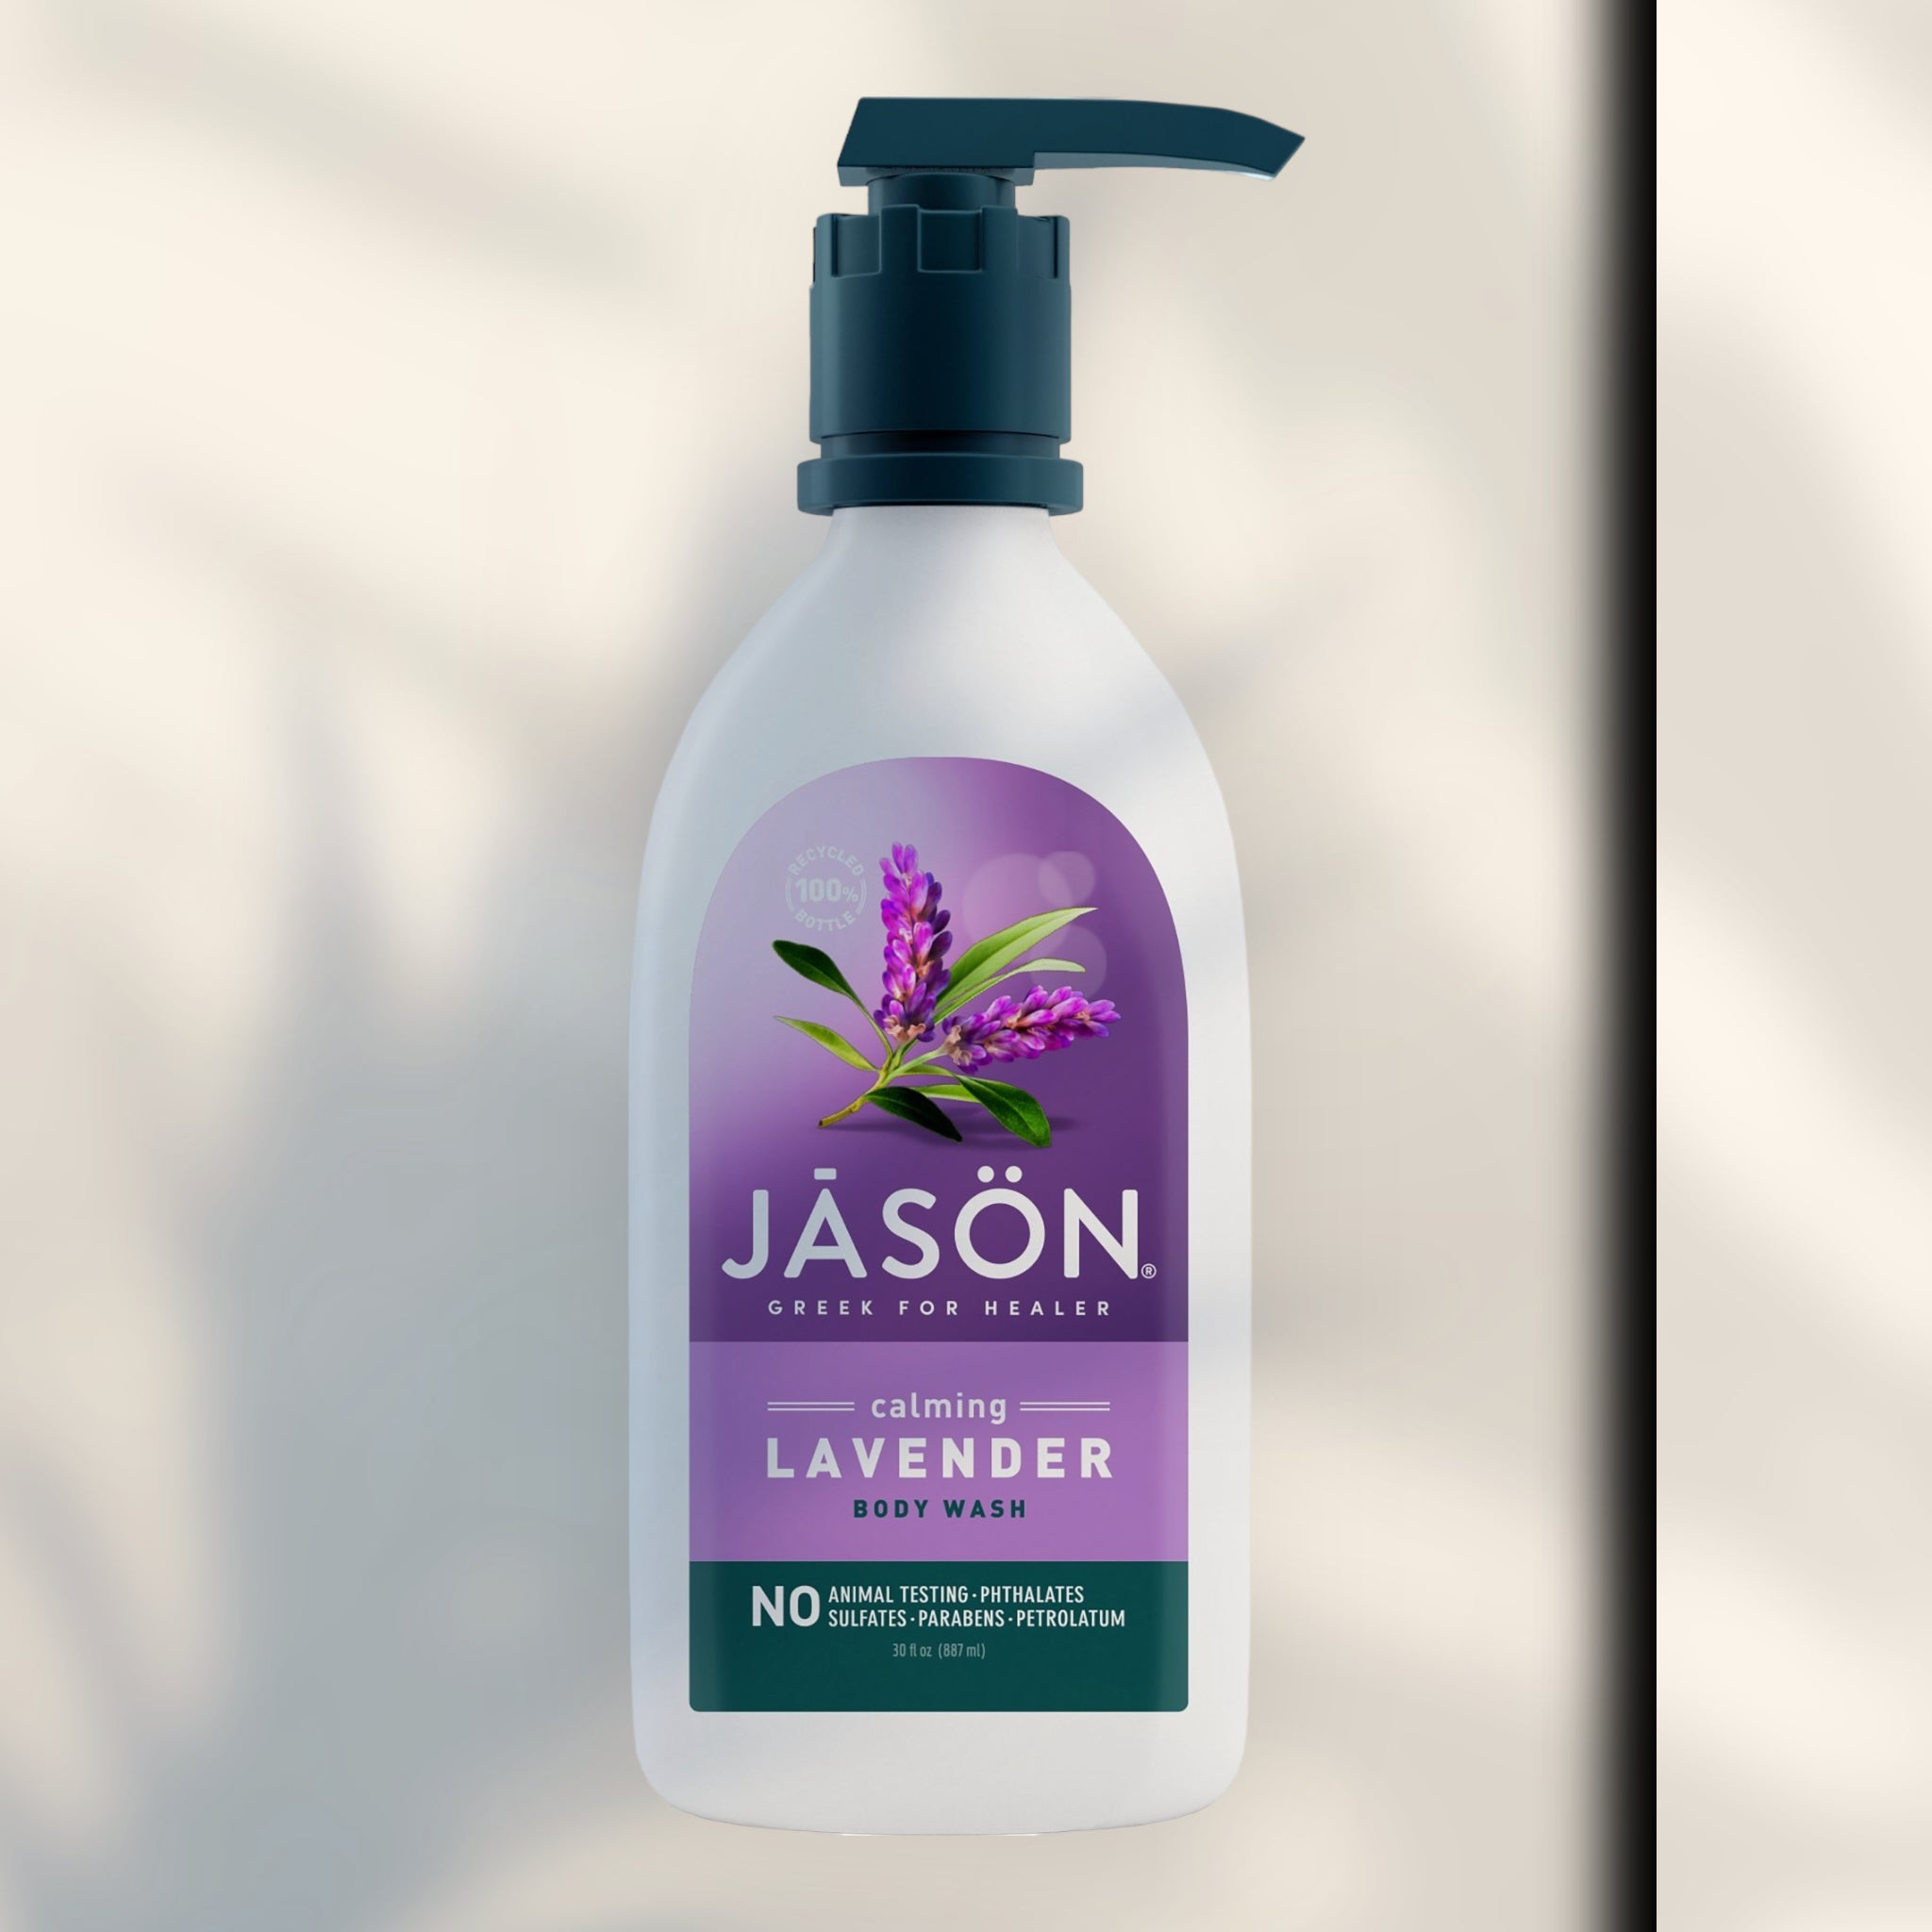 Calming Lavender Body Wash - mypure.co.uk